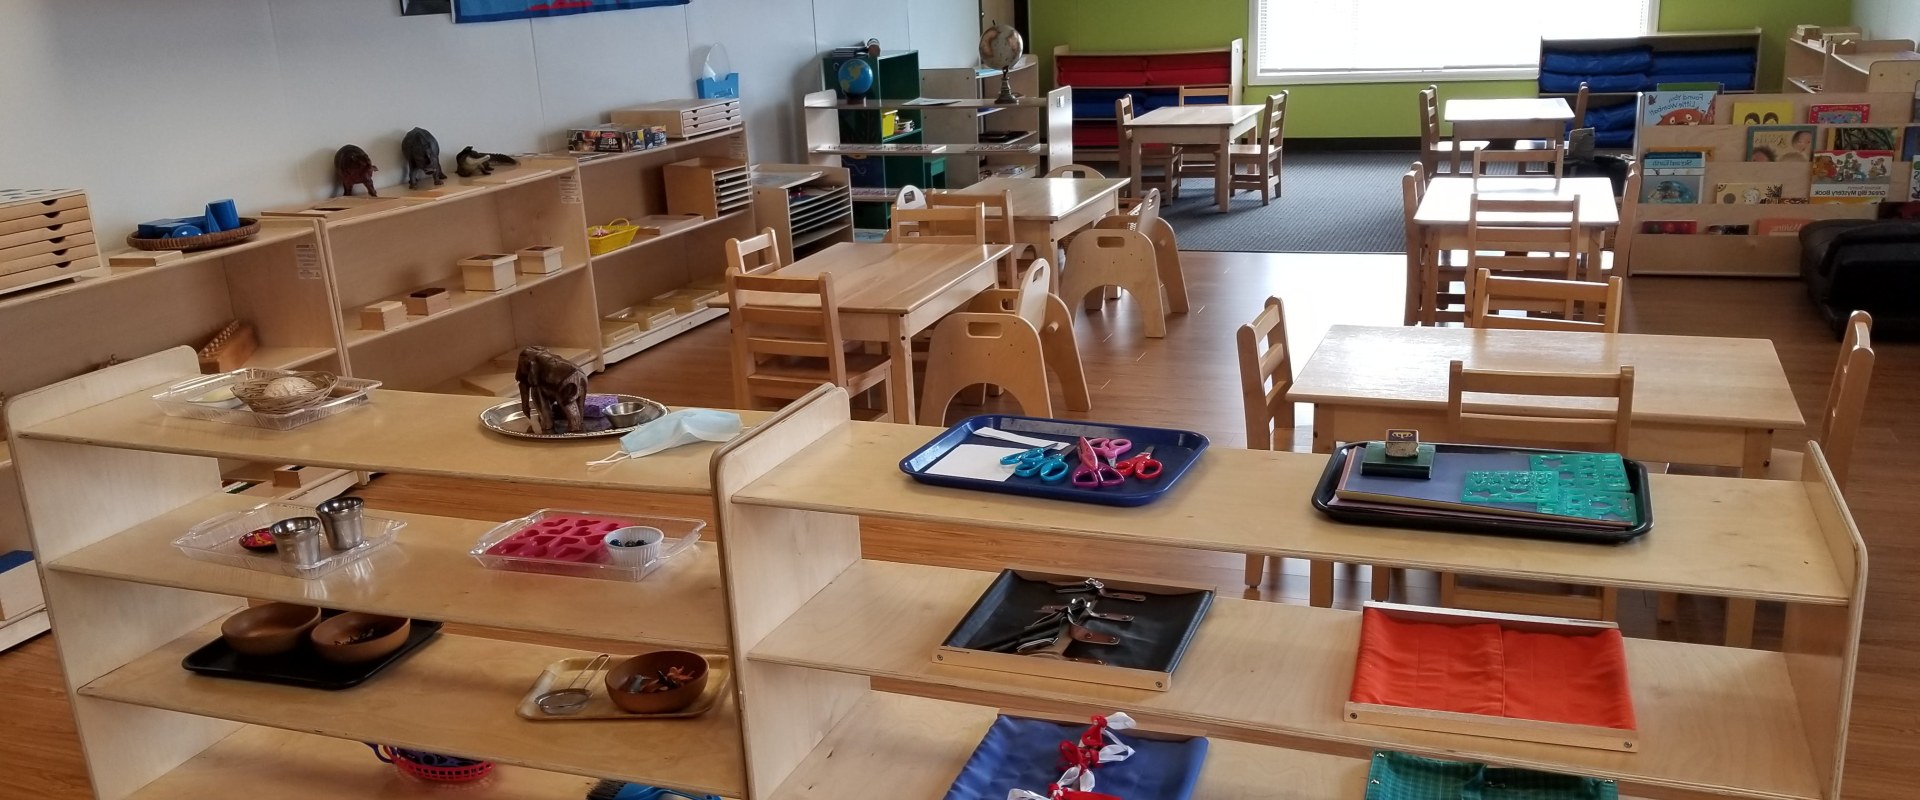 Exploring the Benefits of Montessori Education in Central Colorado